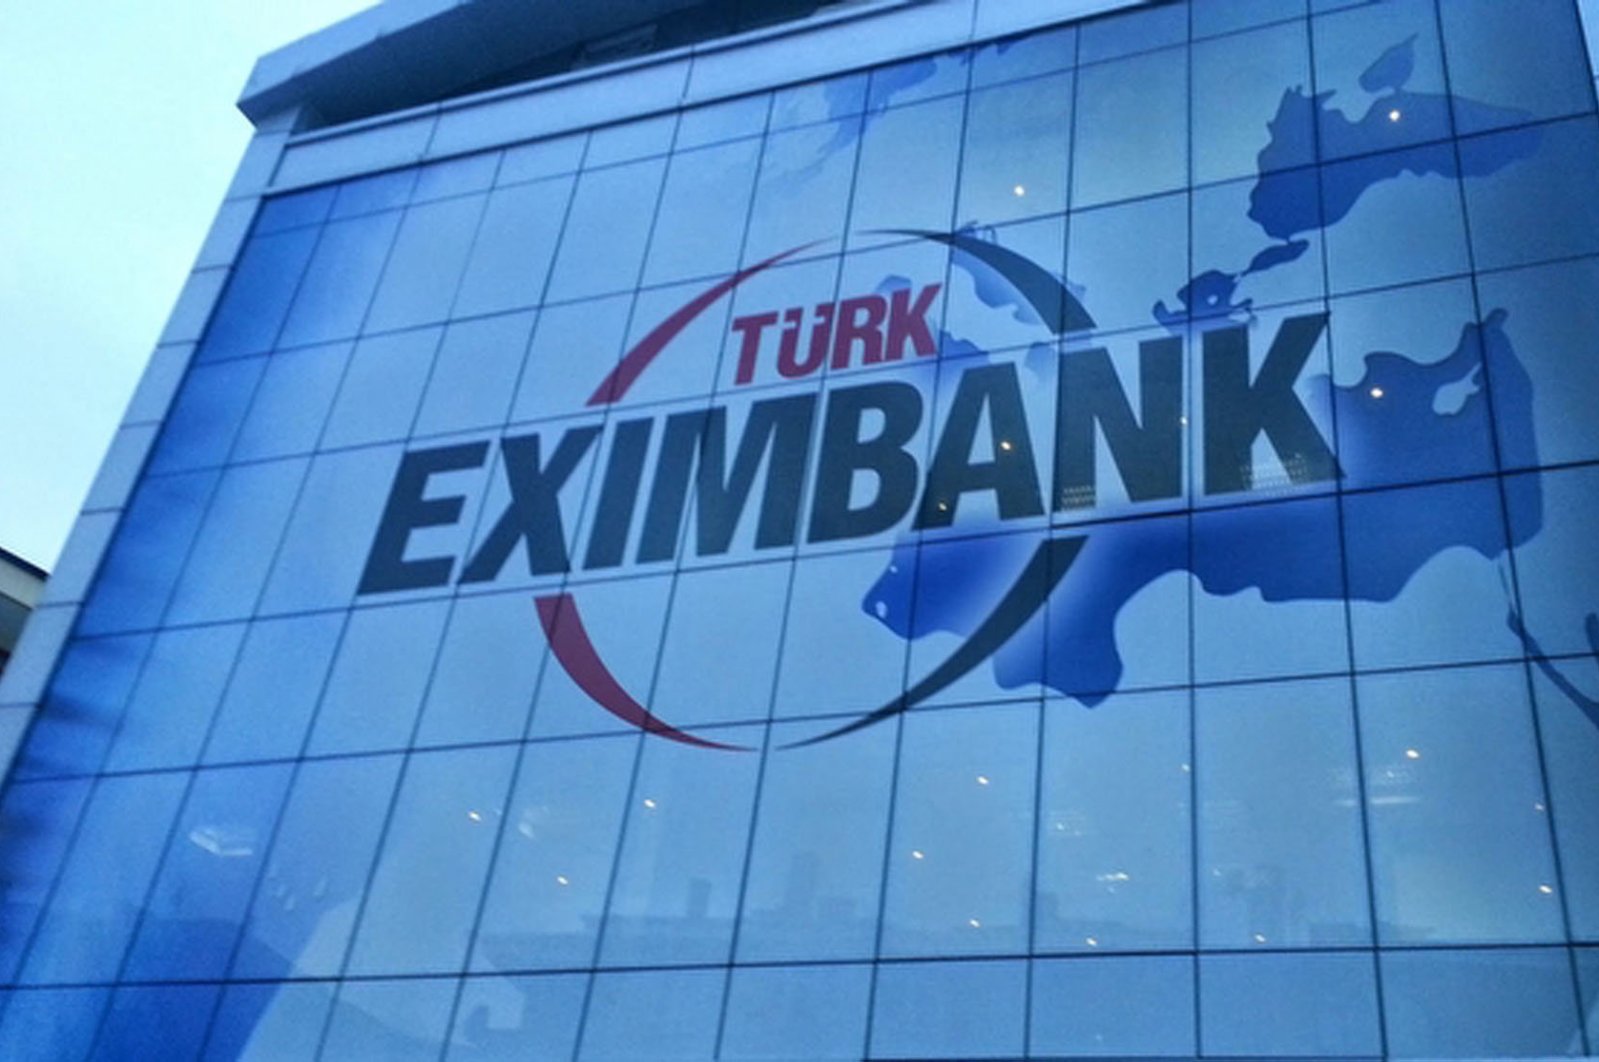 The Türk Eximbank headquarters is seen in Istanbul, Turkey. (File Photo)